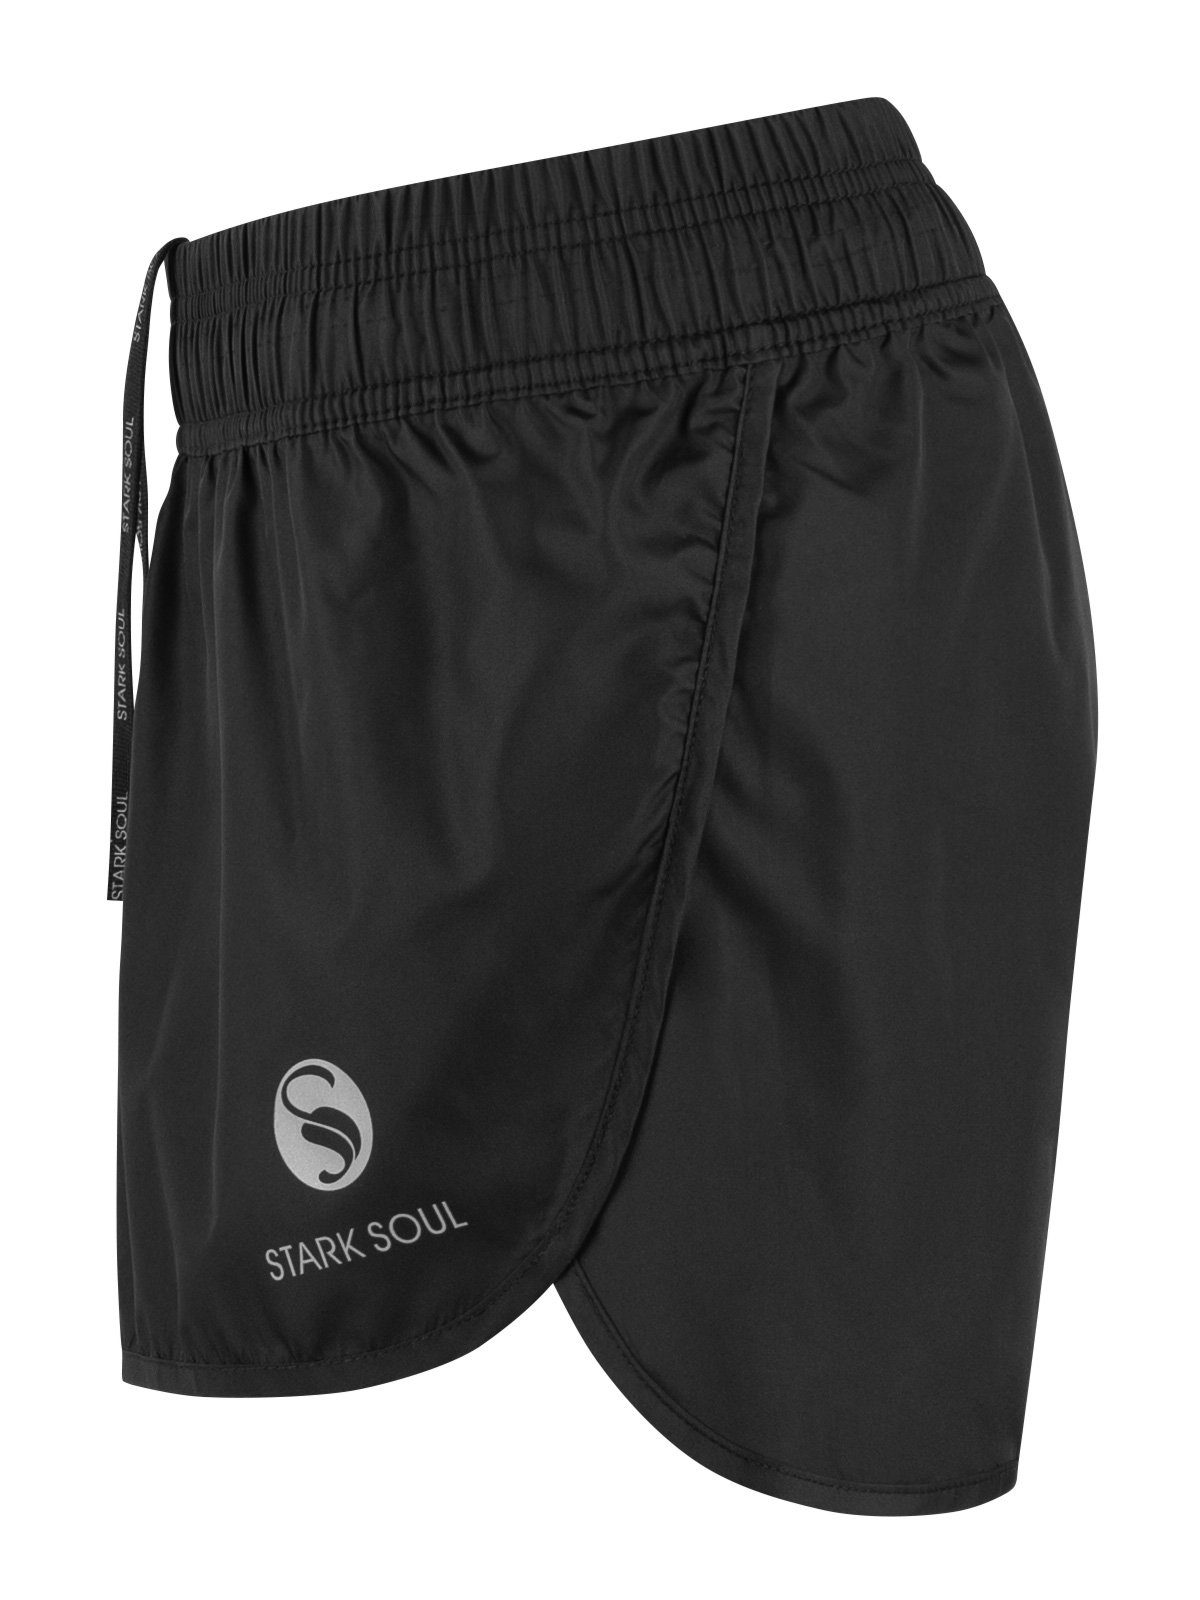 Sporthose Schwarz kurze Dry Short Schnelltrocknend Soul® Quick aus Sport - - Material Sporthose Stark